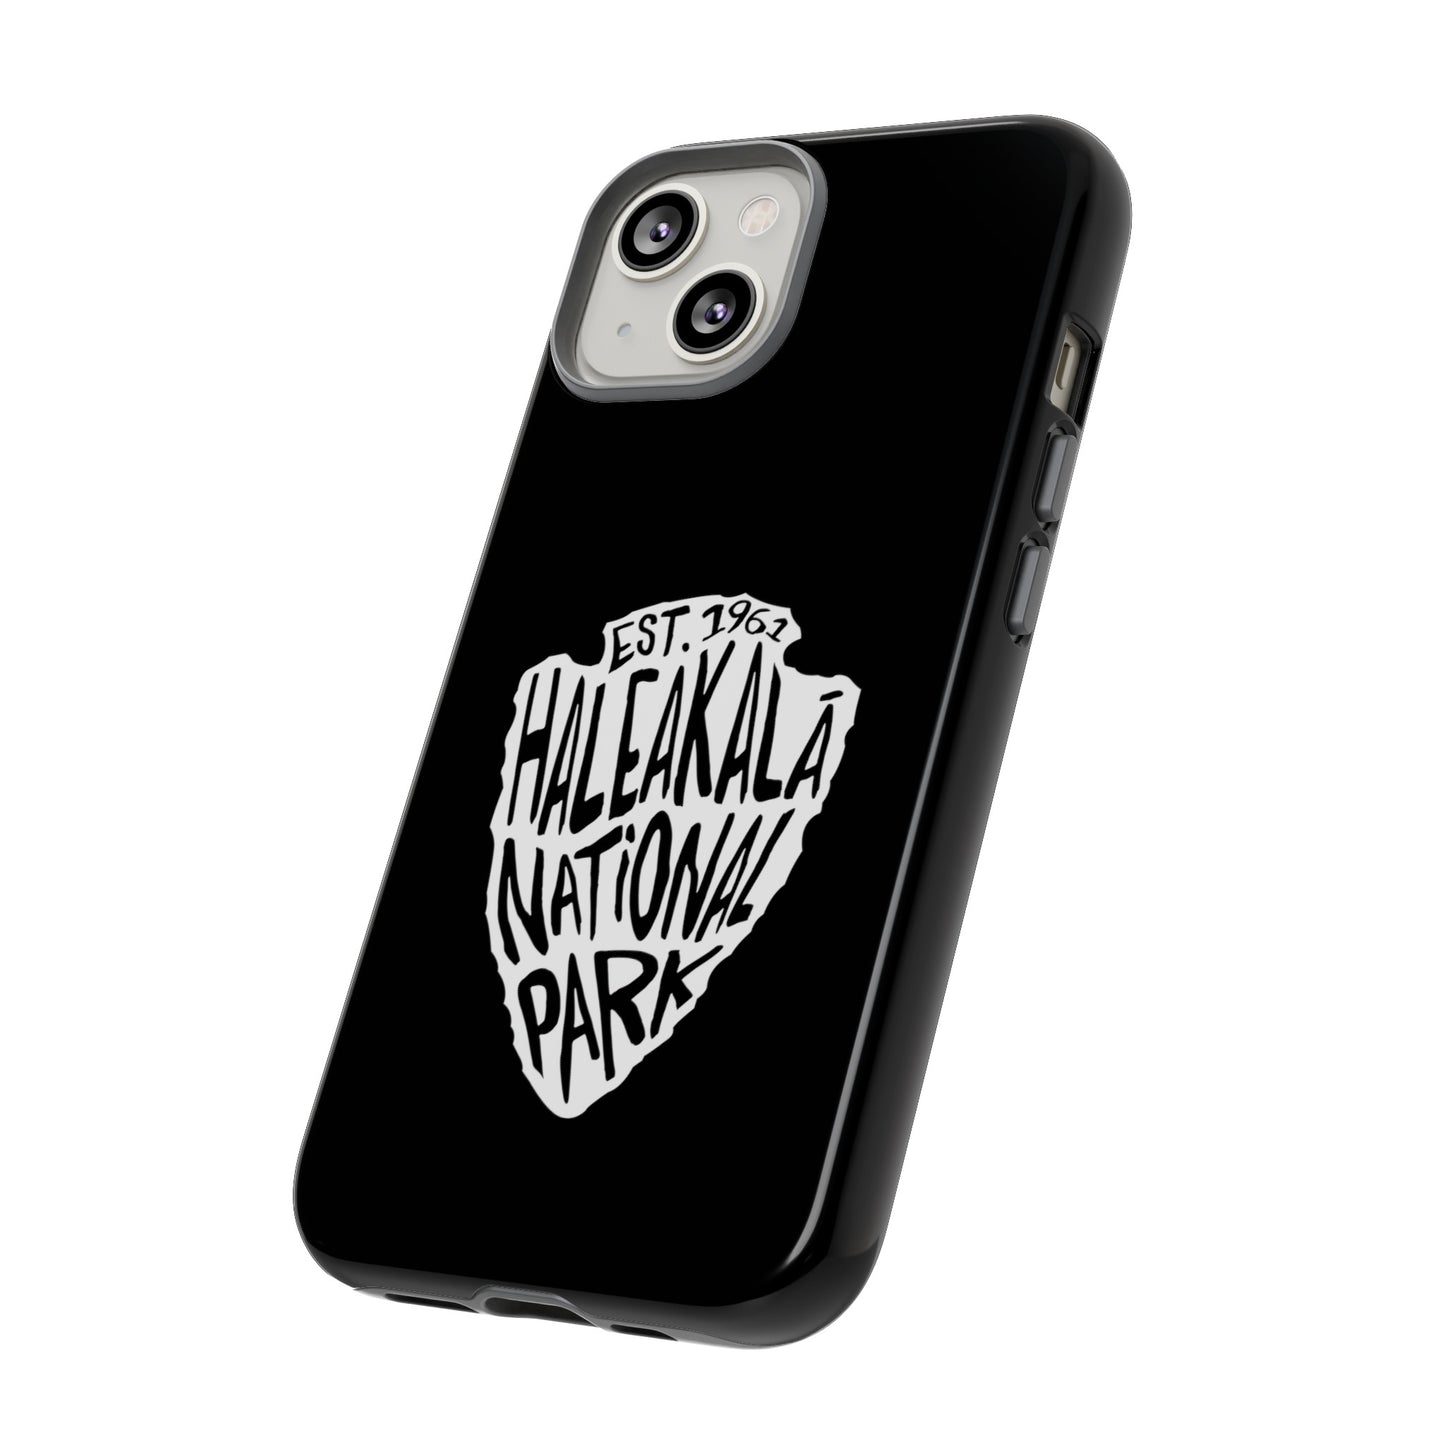 Haleakala National Park Phone Case - Arrowhead Design